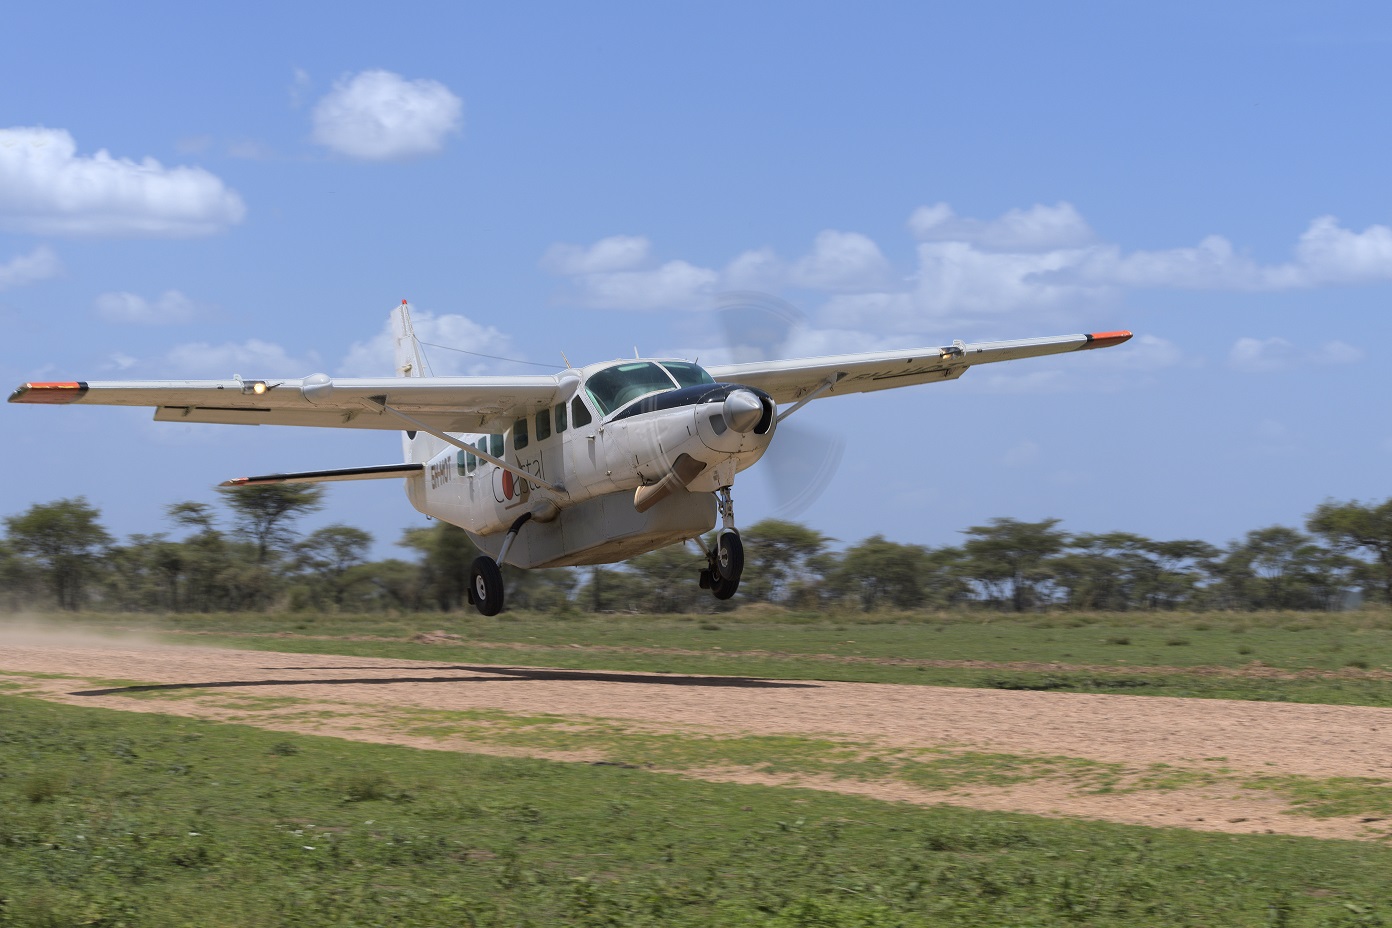 Fly Safaris